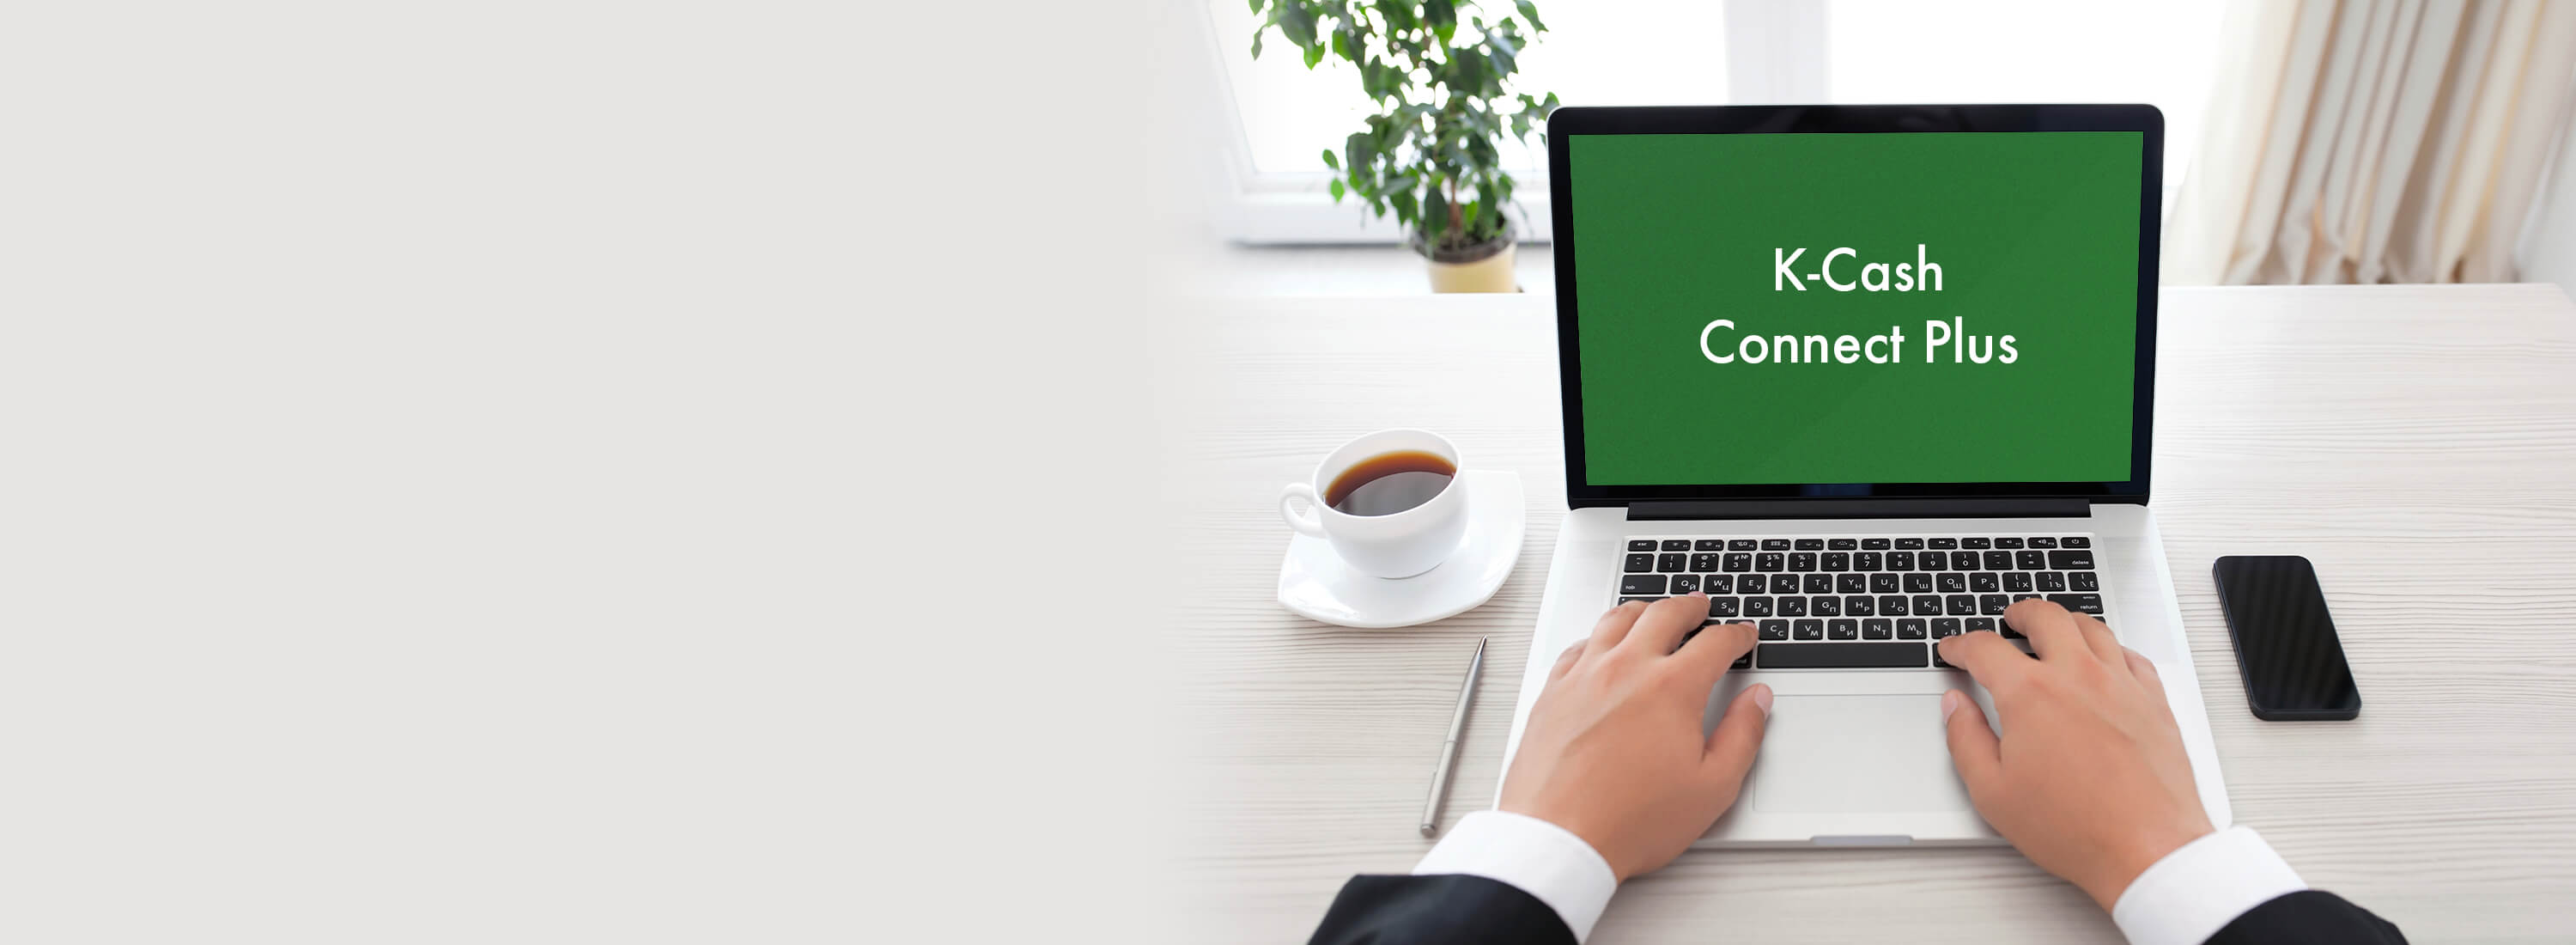 K-Cash Connect Plus บริการ Online Banking สำหรับธุรกิจ , สั่งการและตรวจสอบธุรกรรมของบริษัทได้แบบ ​Real-Time